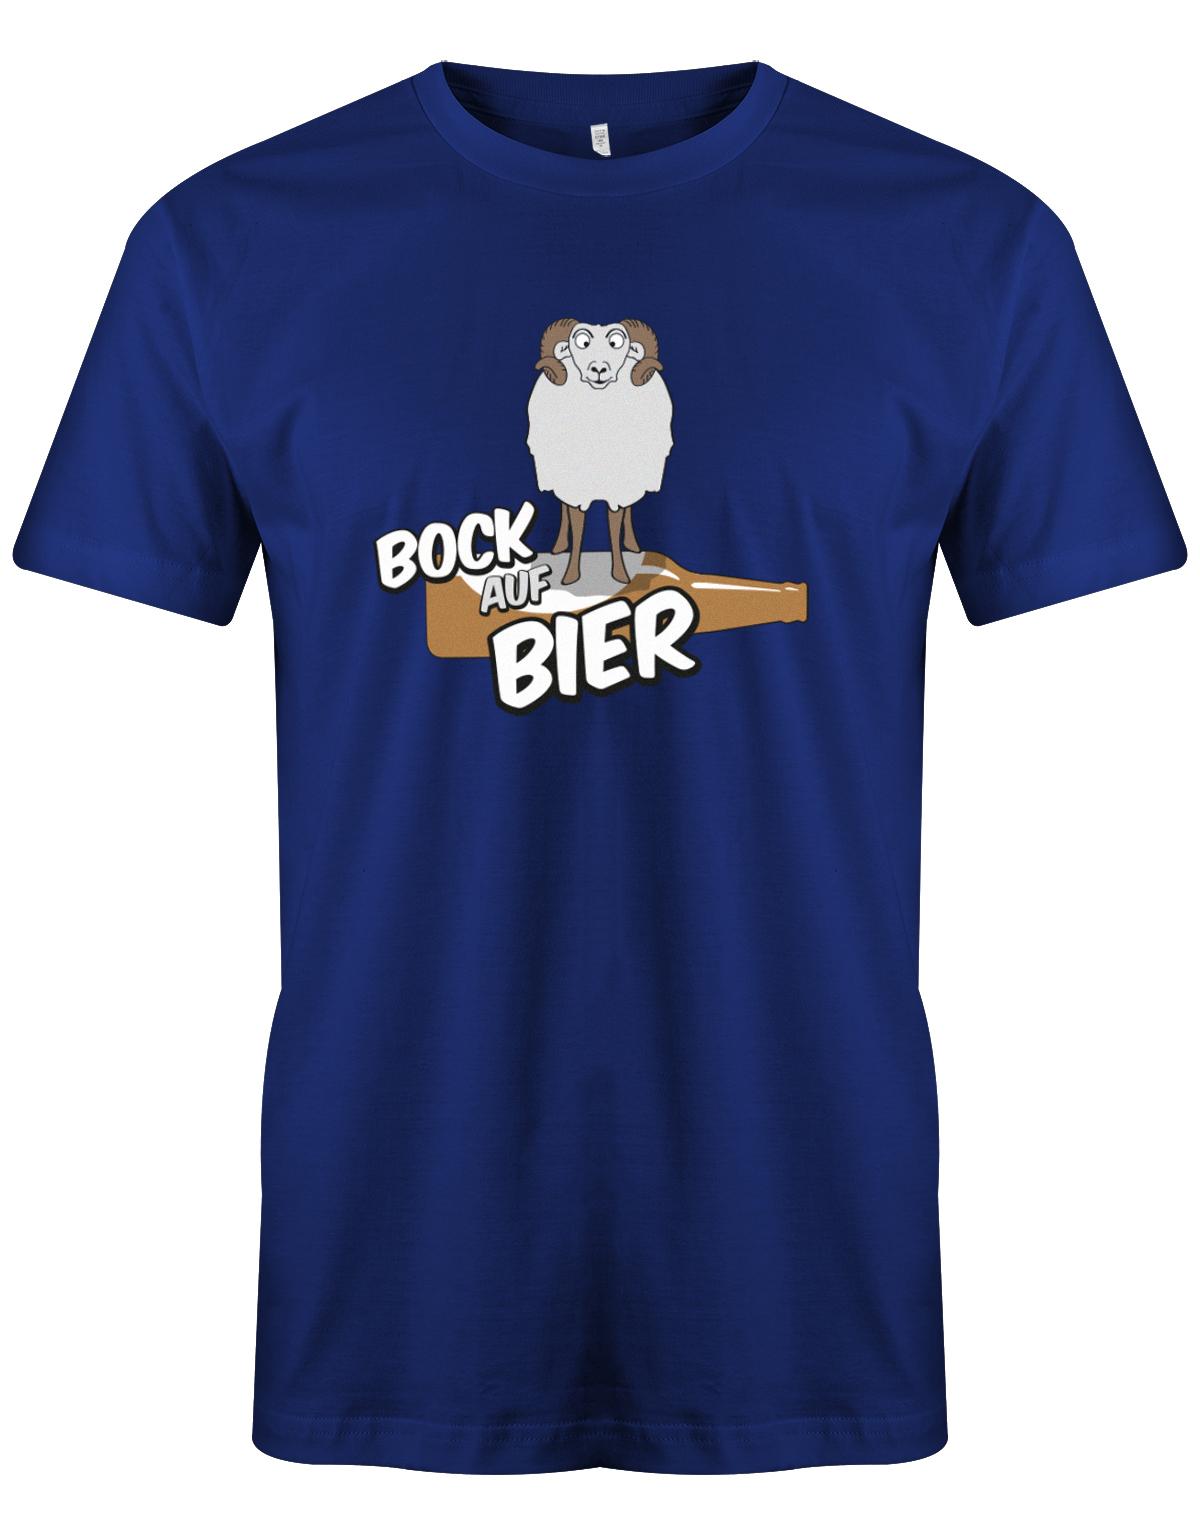 Bock-auf-Bier-Herren-Shirt-Royalblau